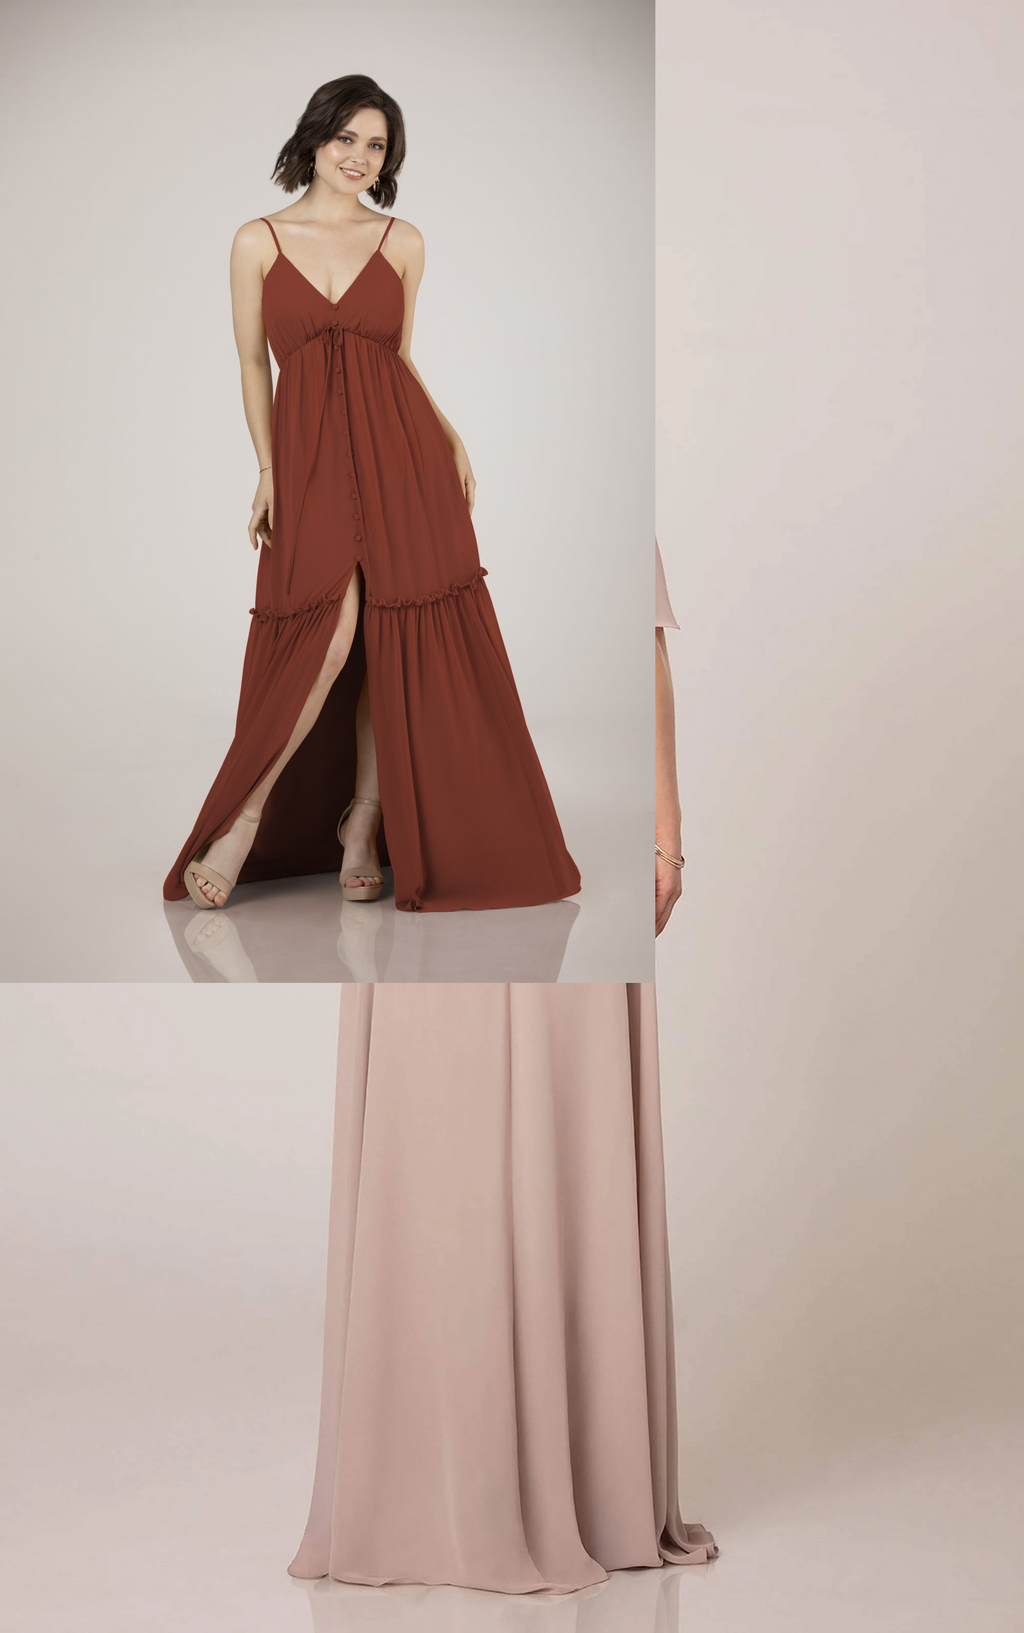 Sorella Vita Dress Style 9414 (Burnt Orange-Size 10) Prom, Ball., Black-tie, Bridesmaid, Pageant